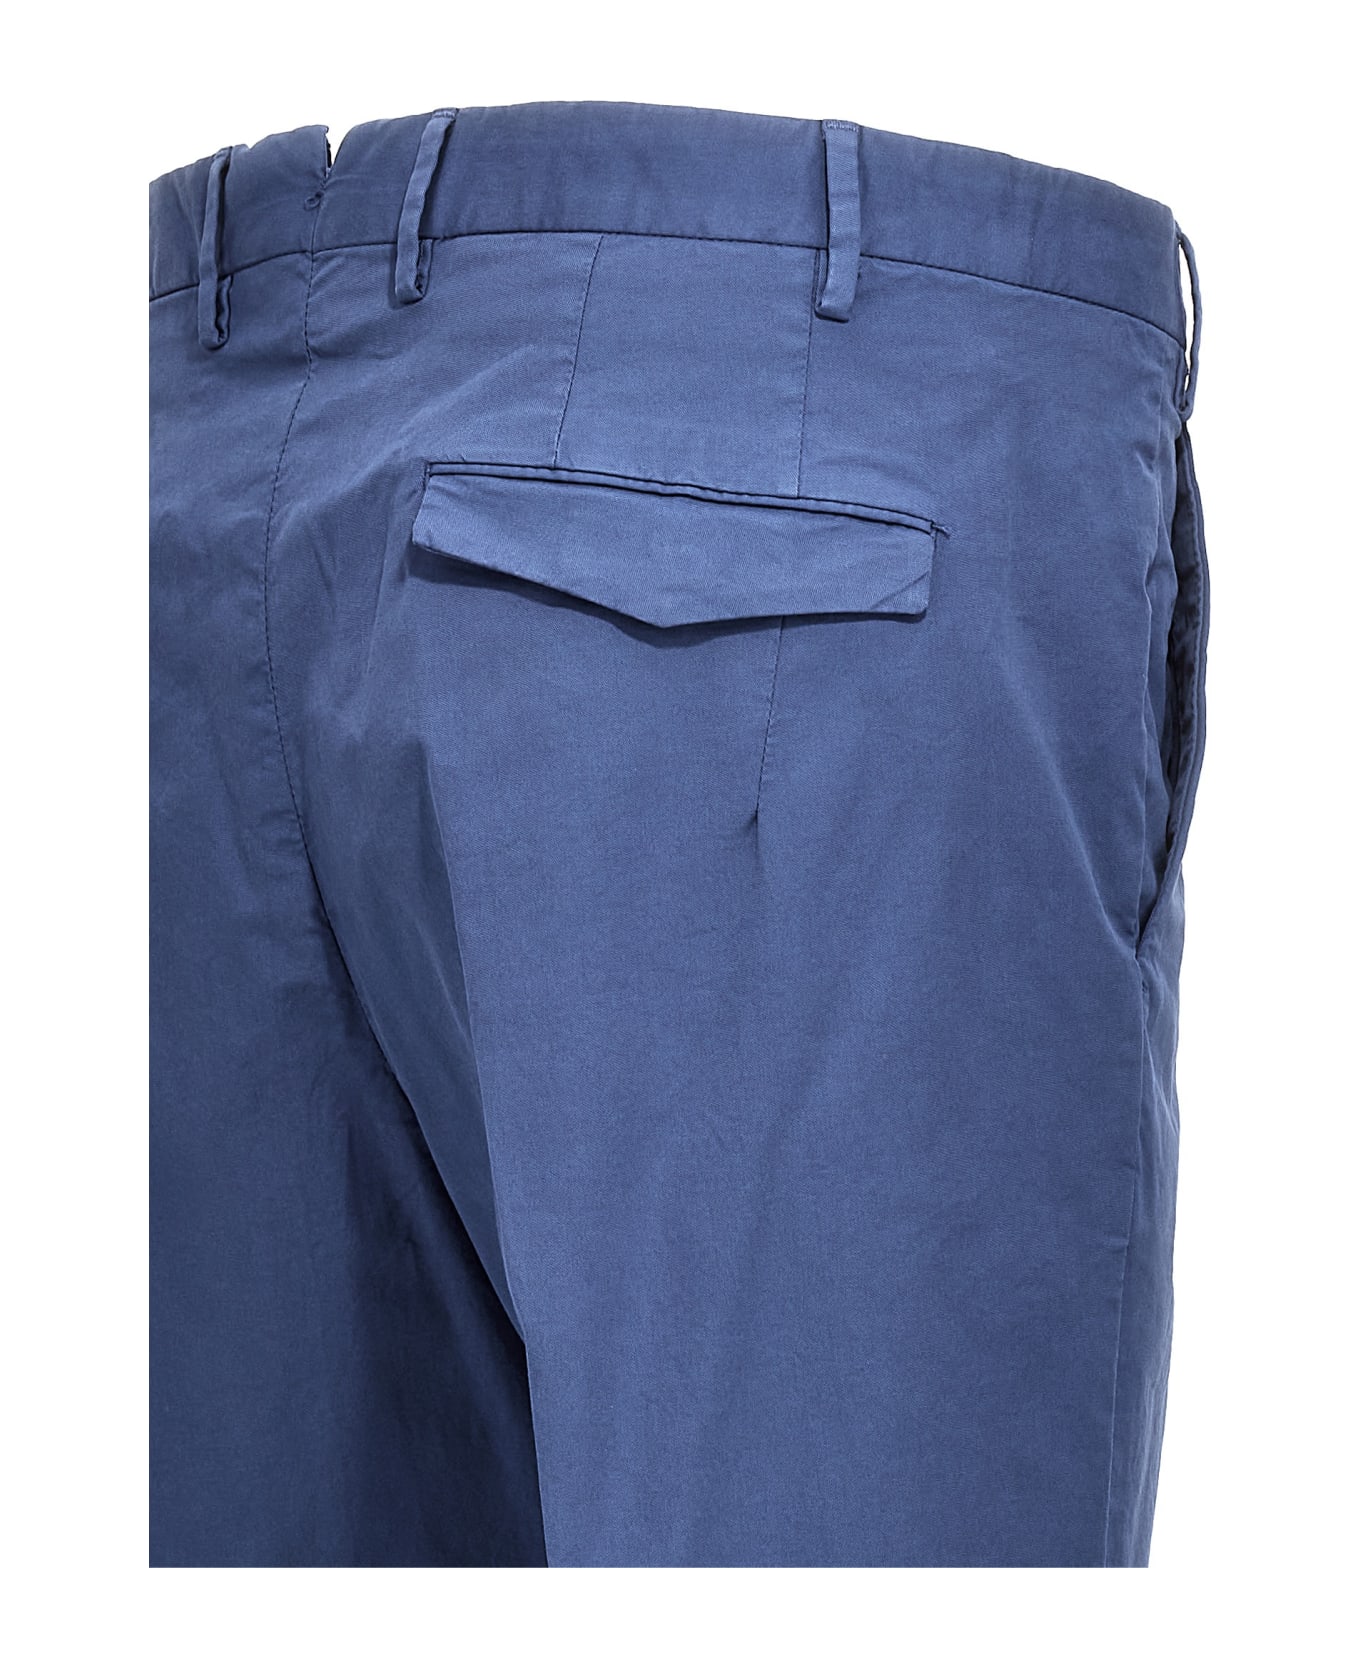 PT Torino 'master' Pants - Light Blue ボトムス